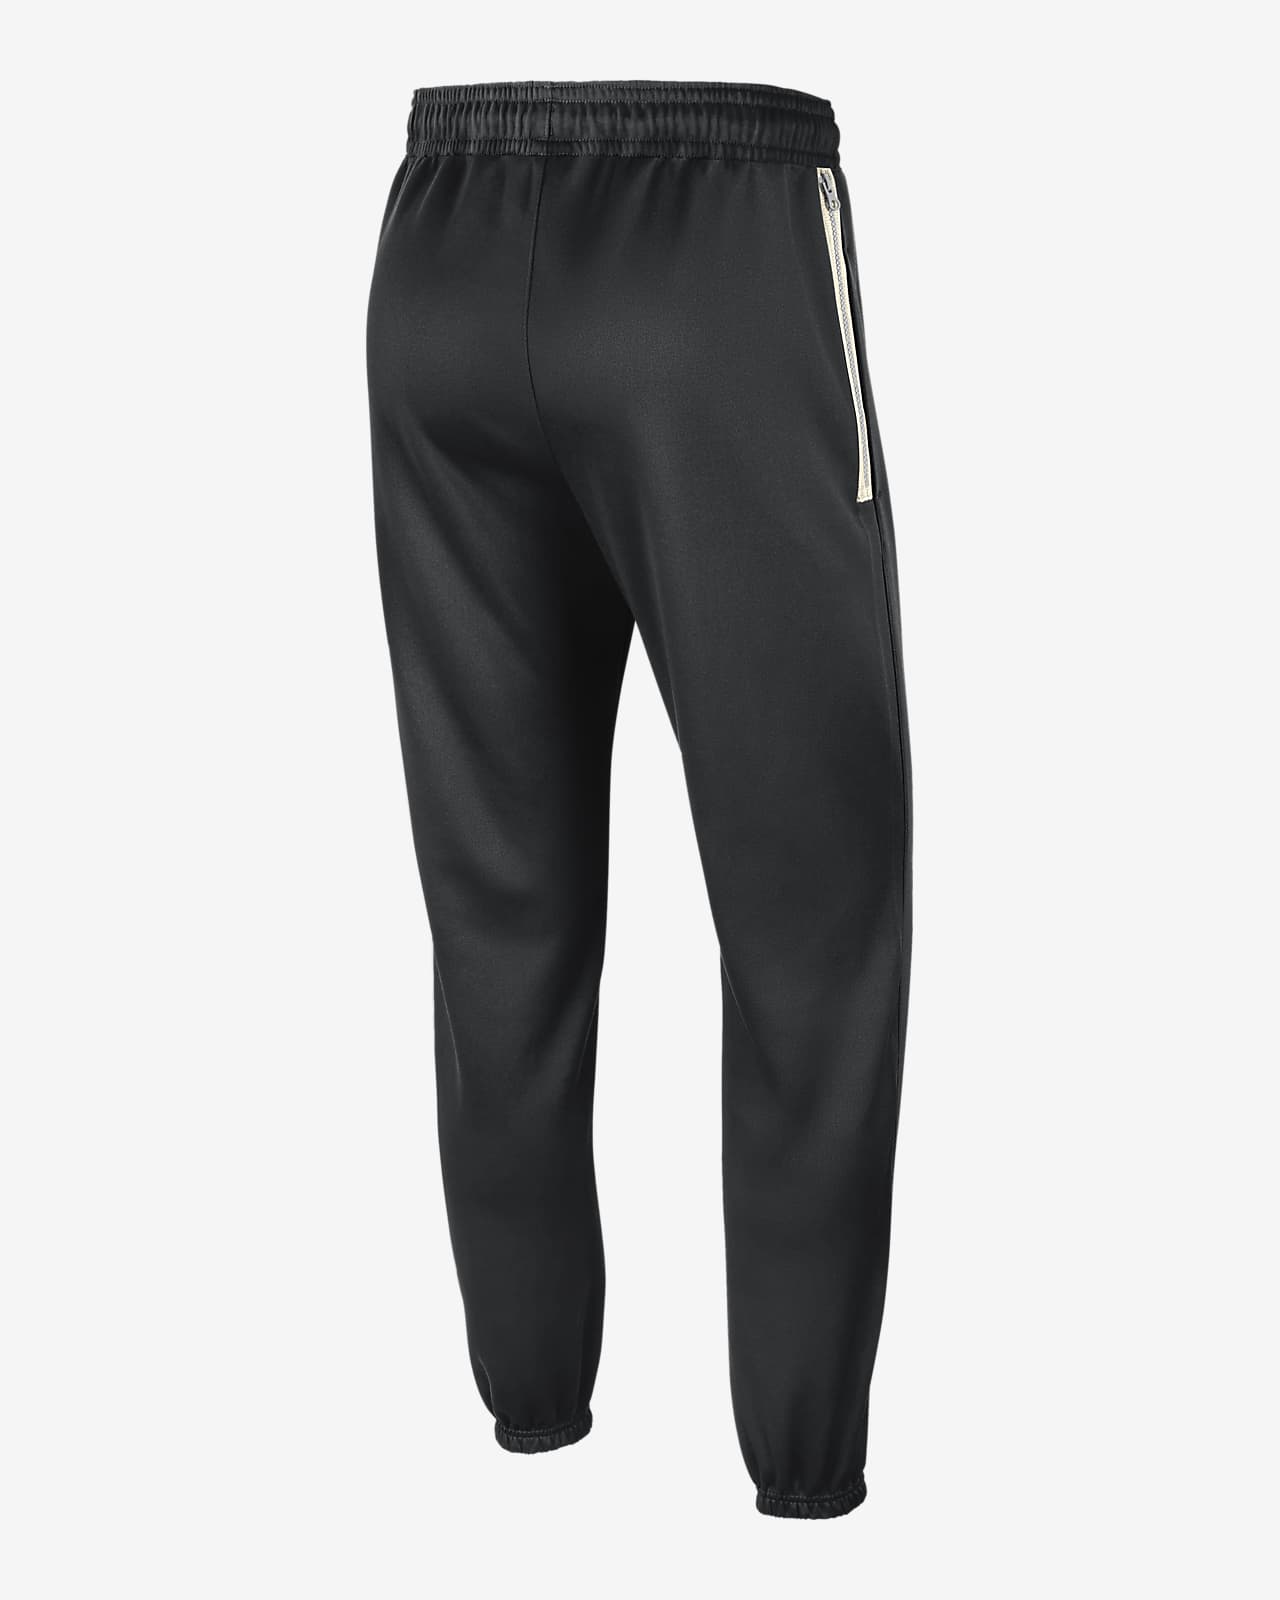 Pantalones de la NBA Nike Dri-FIT para hombre Lakers Standard Issue. Nike .com